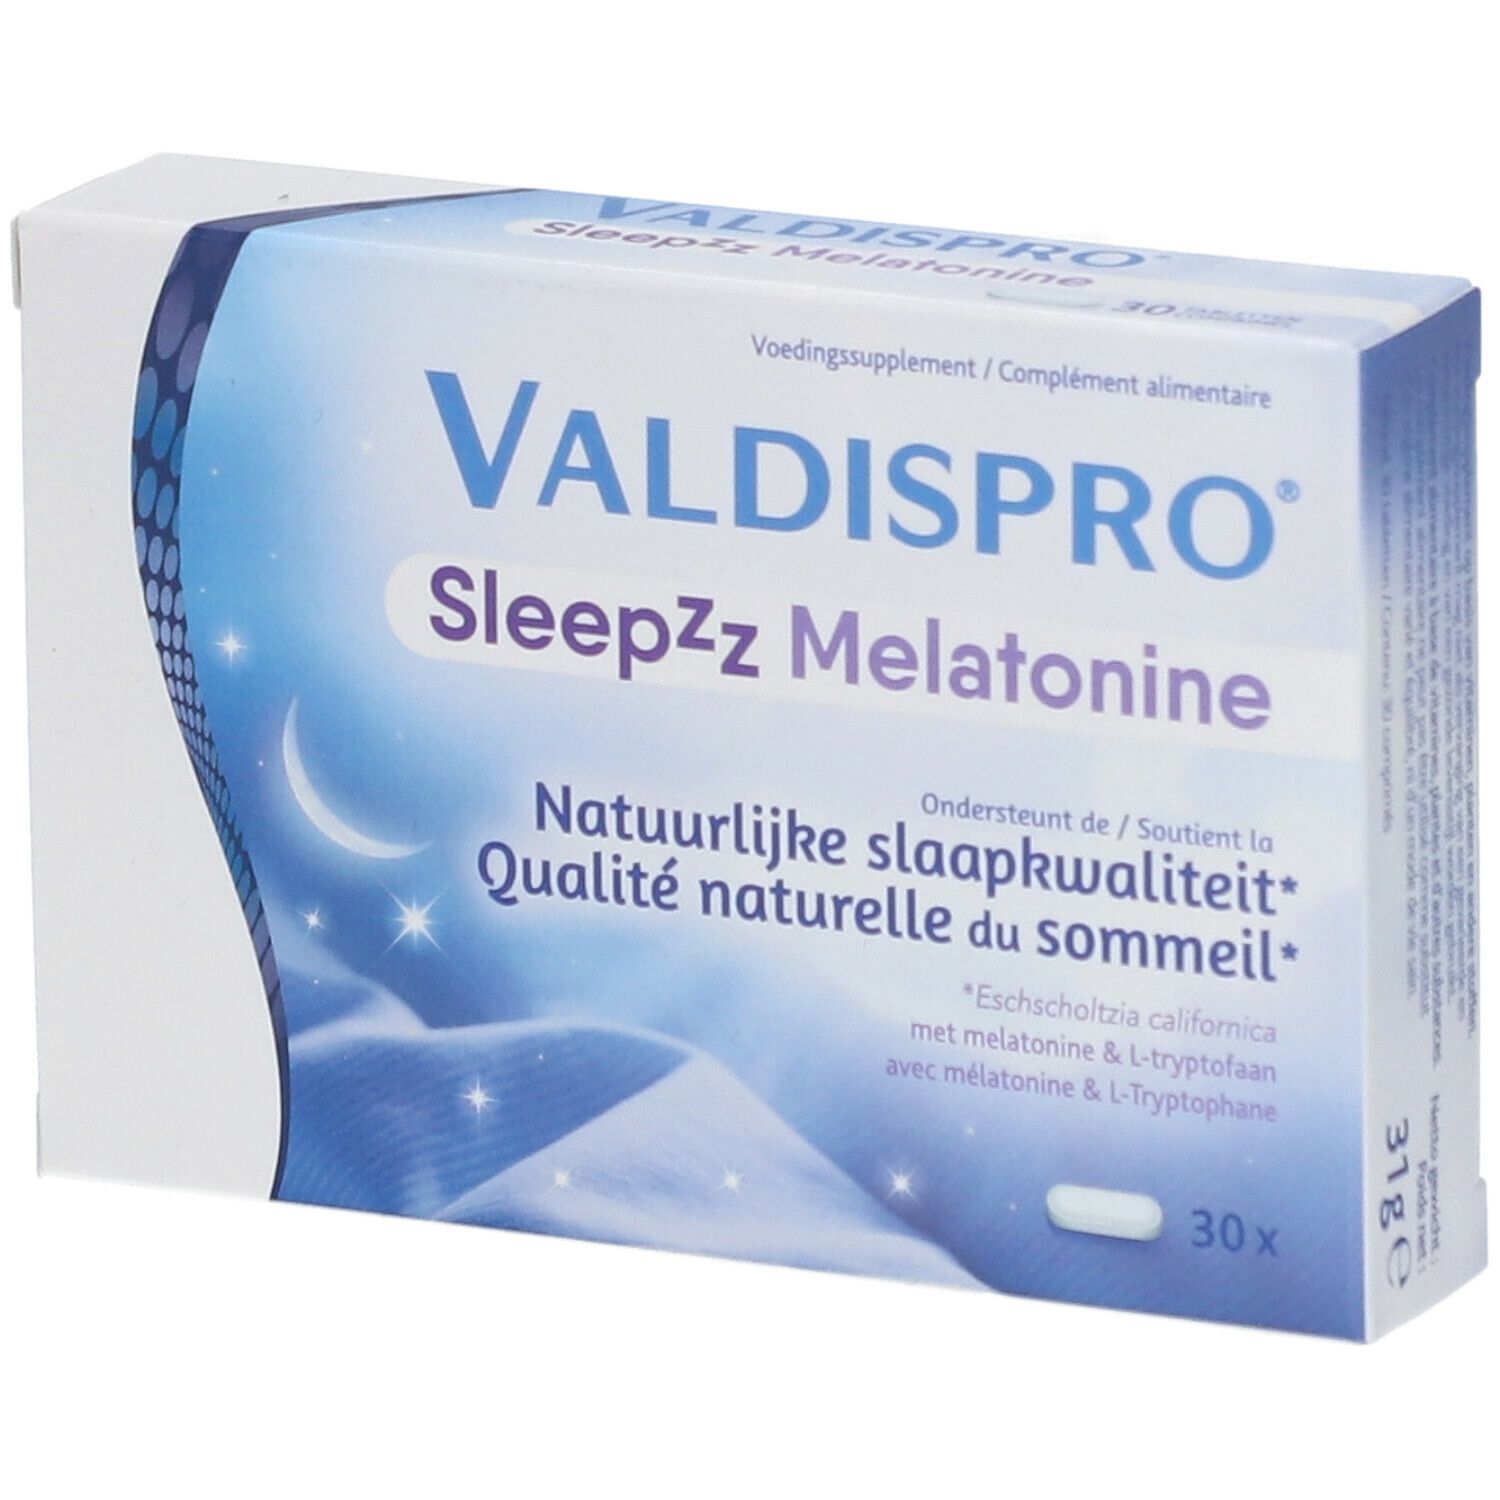 Valdispro® Sleepzz Melatonine